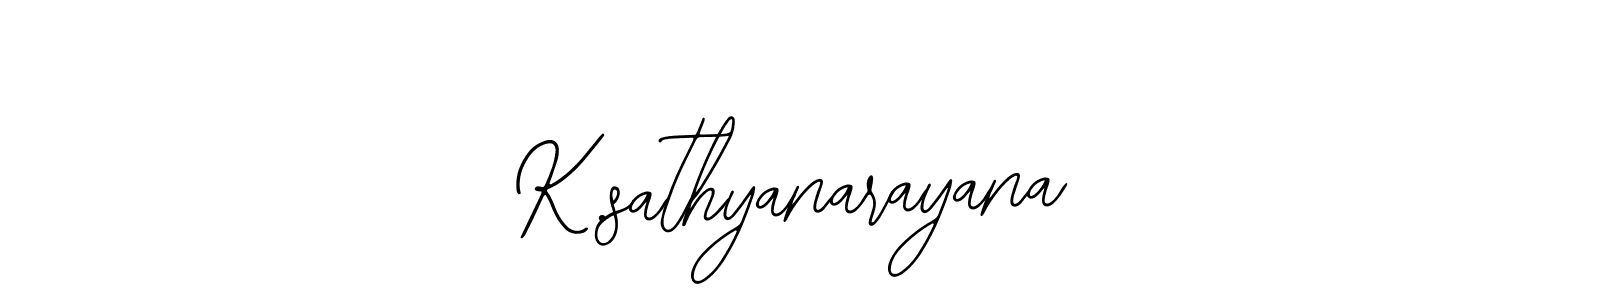 How to make K.sathyanarayana signature? Bearetta-2O07w is a professional autograph style. Create handwritten signature for K.sathyanarayana name. K.sathyanarayana signature style 12 images and pictures png